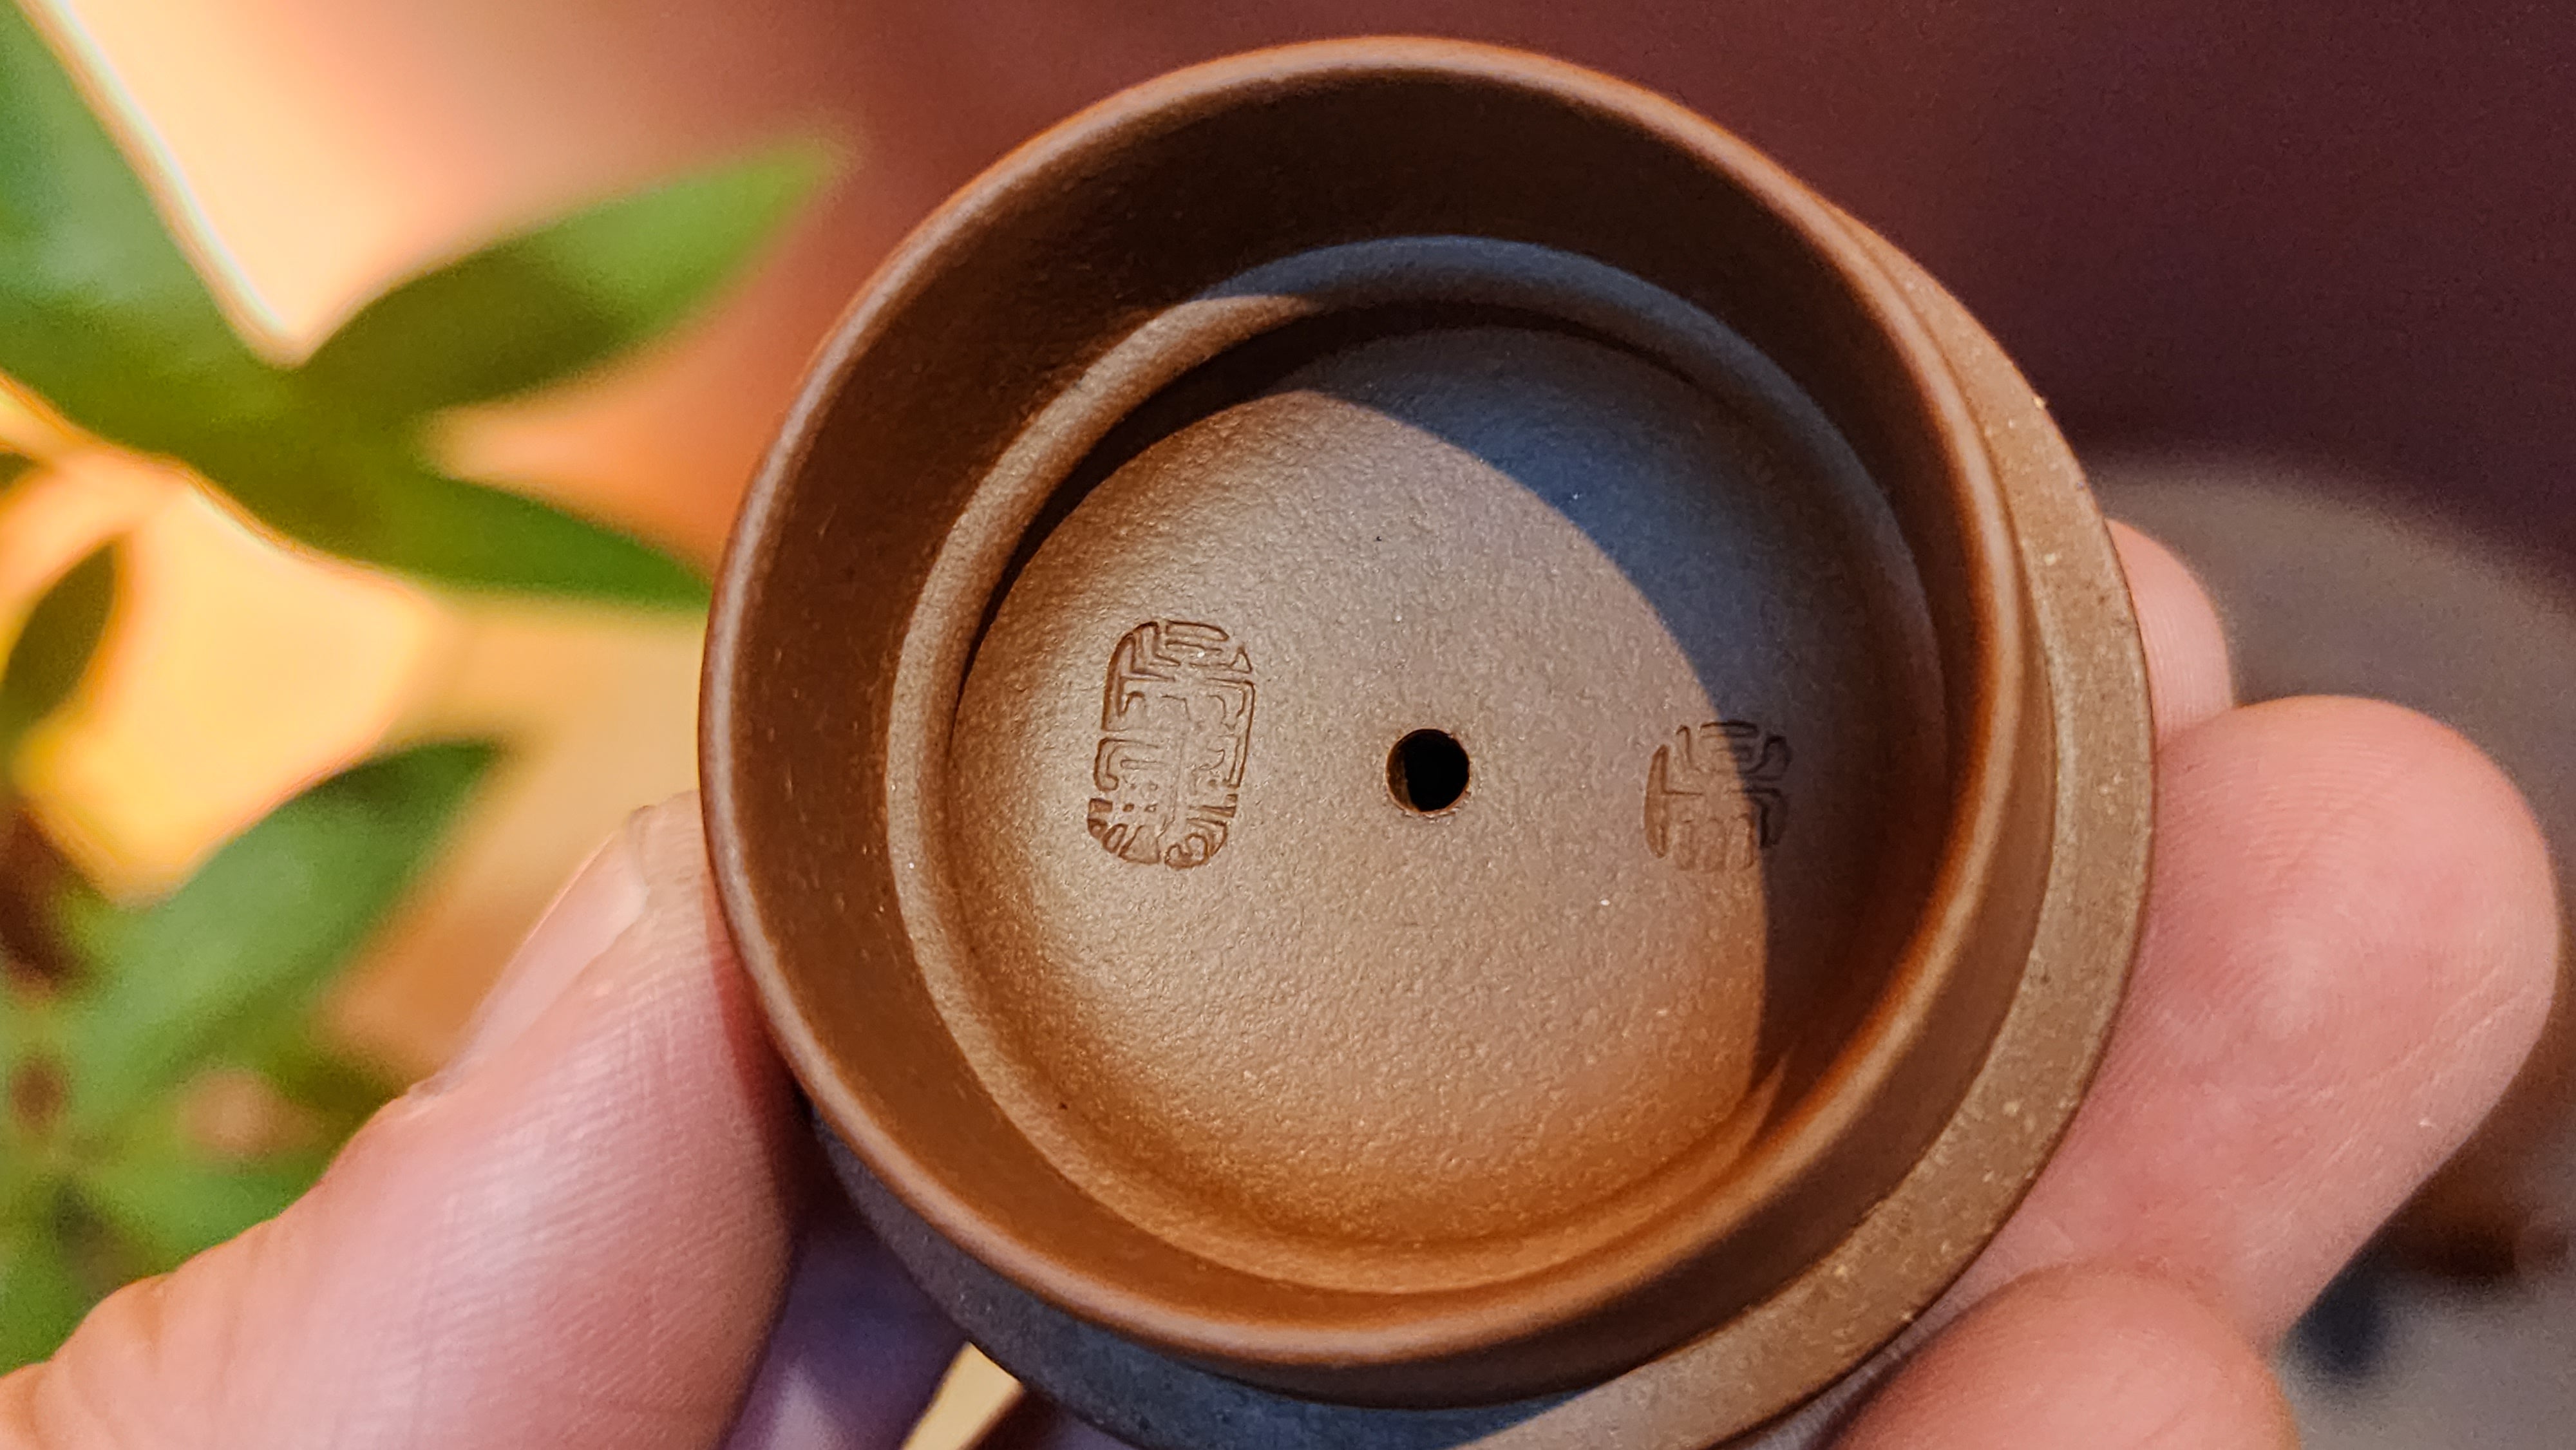 Fo Shou 佛手, 161.8ml, BenShan ZhuNi 本山朱泥, by Craftsman Wu Peng 吴鹏。Segmental-Corollary + Minimal Ornate Class Pot.